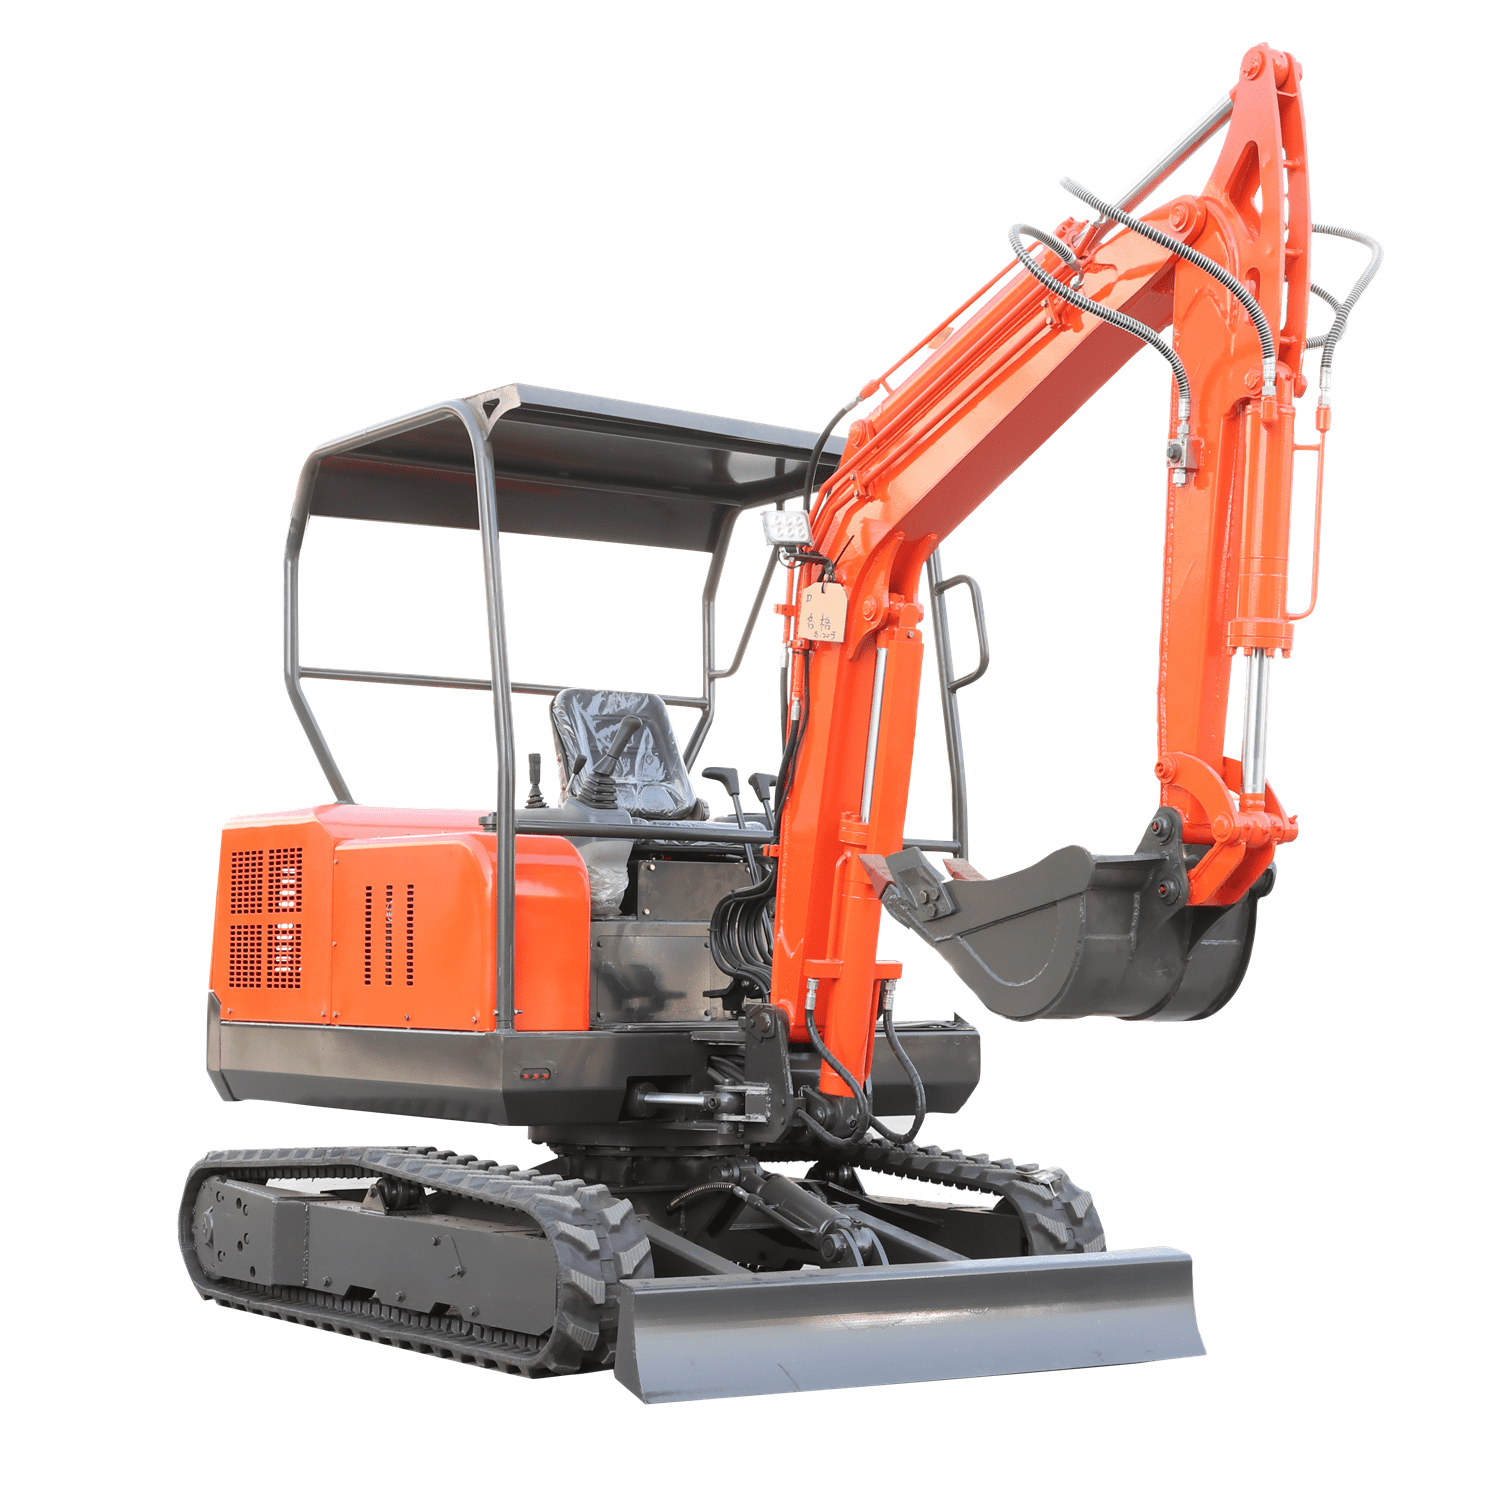 HX30A small track crawler digger excavator